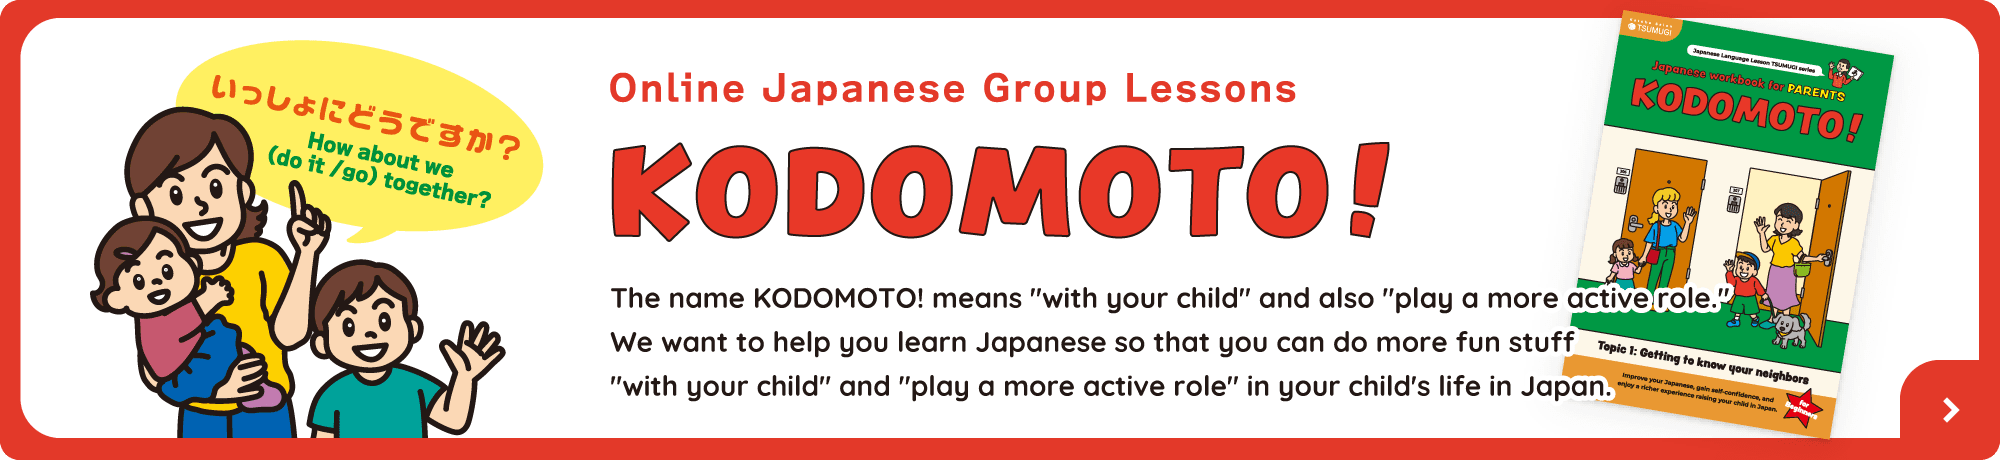 Online Japanese Group Programs KODOMOTO!